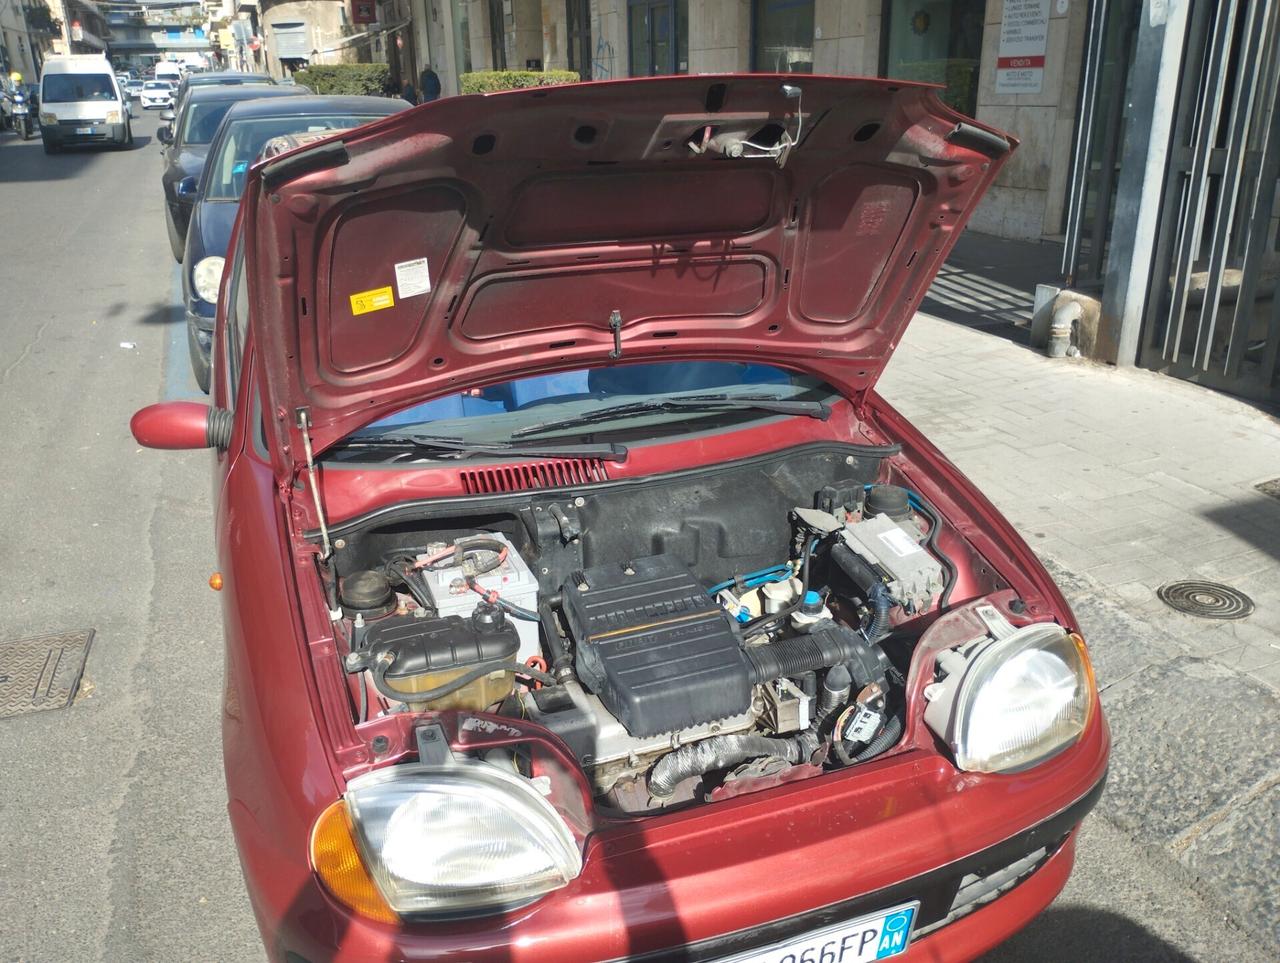 Fiat Seicento 1.1i cat SX